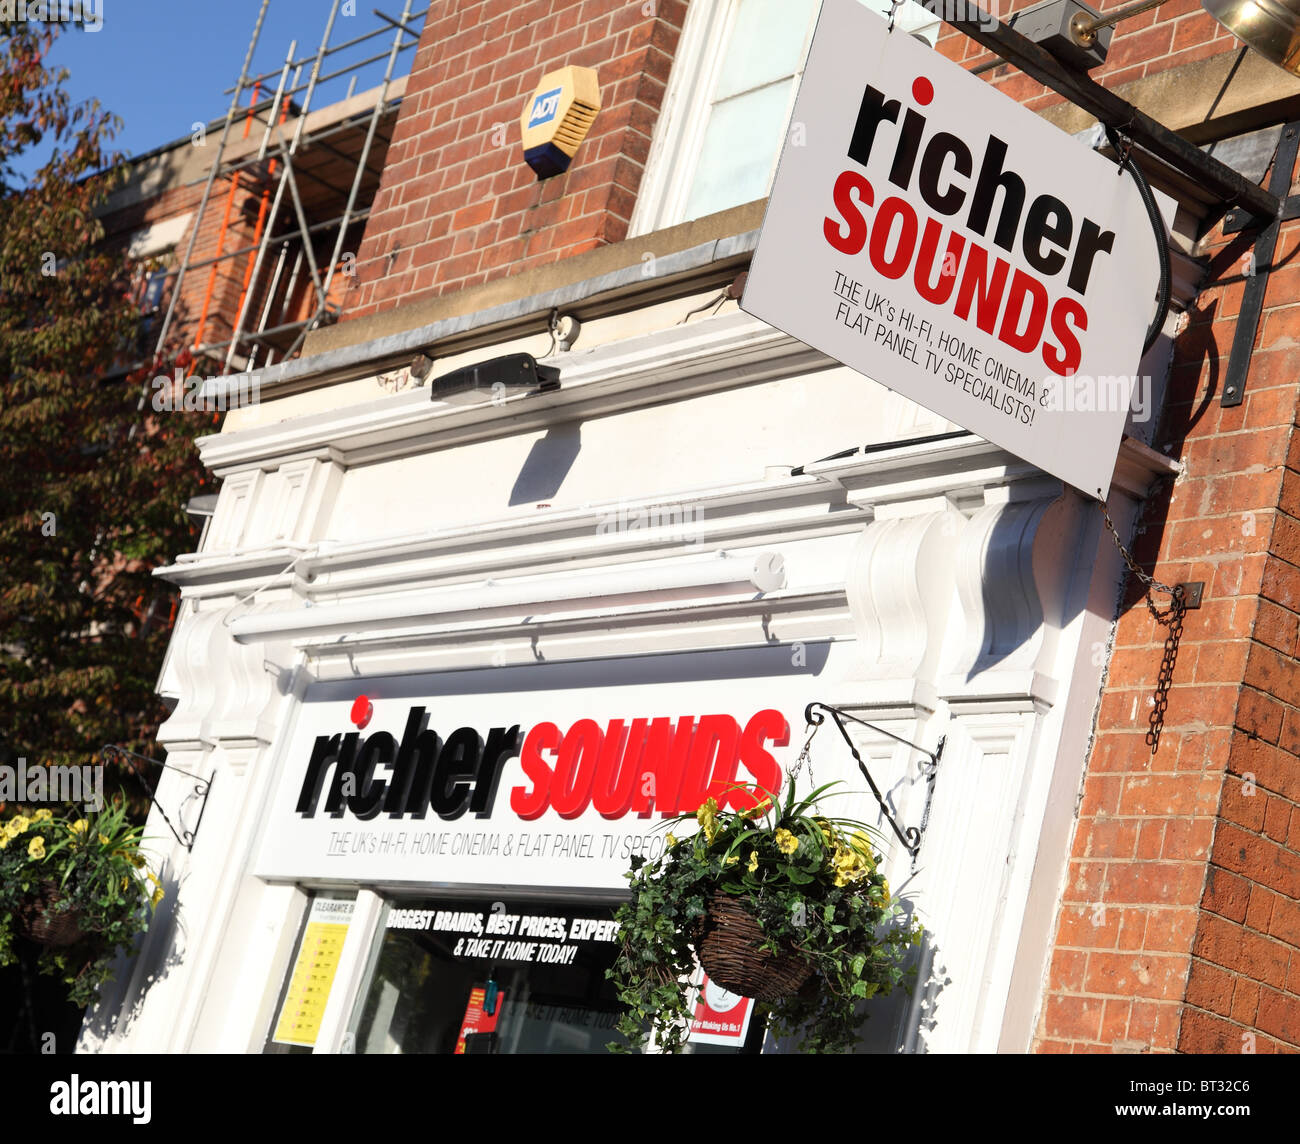 A Richer Sounds store in Nottingham, England, U.K. Stock Photo